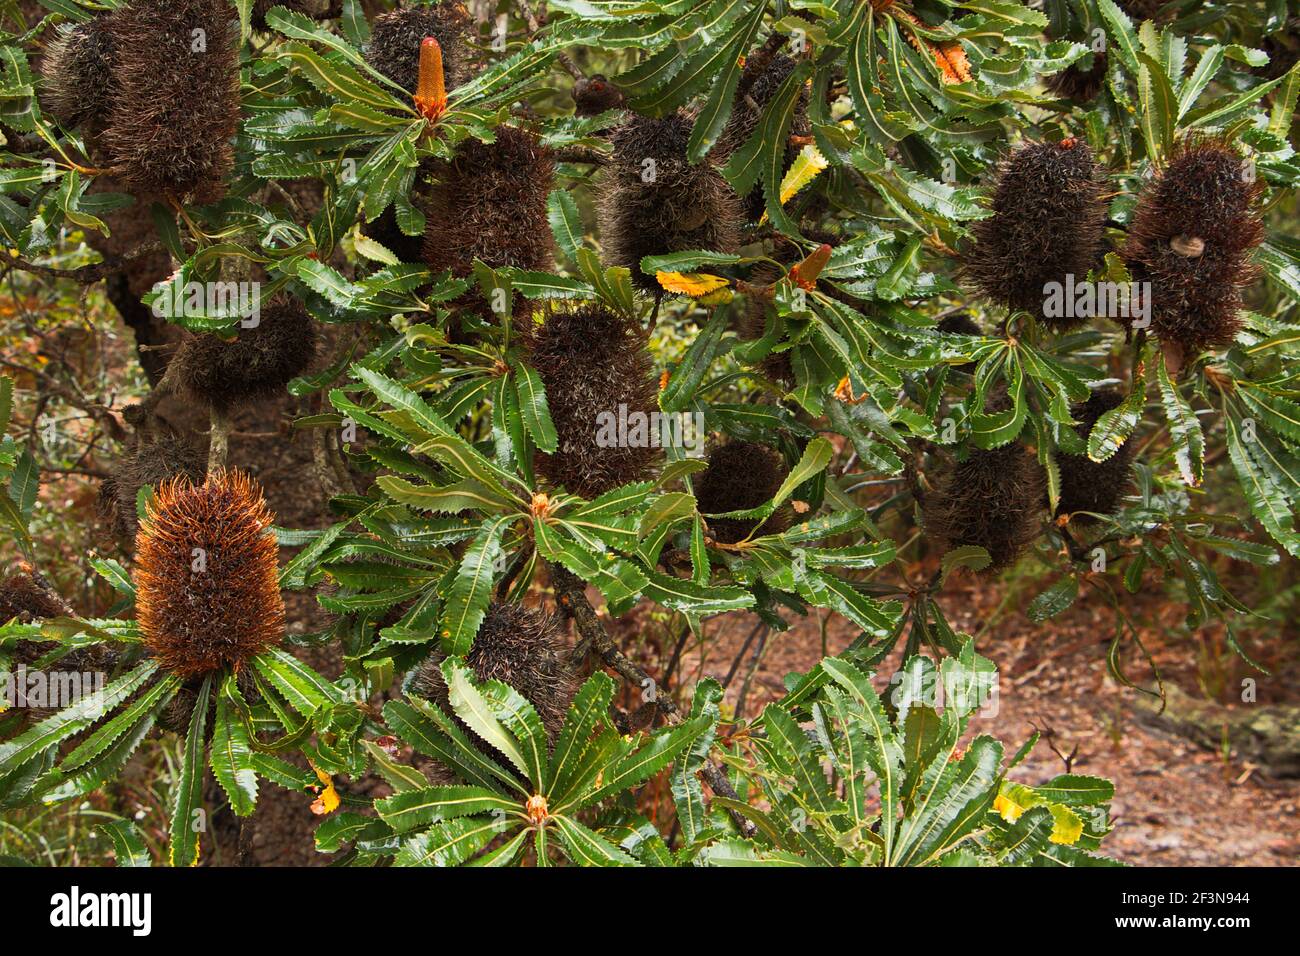 Banksia Tree in Australia Stock Photo